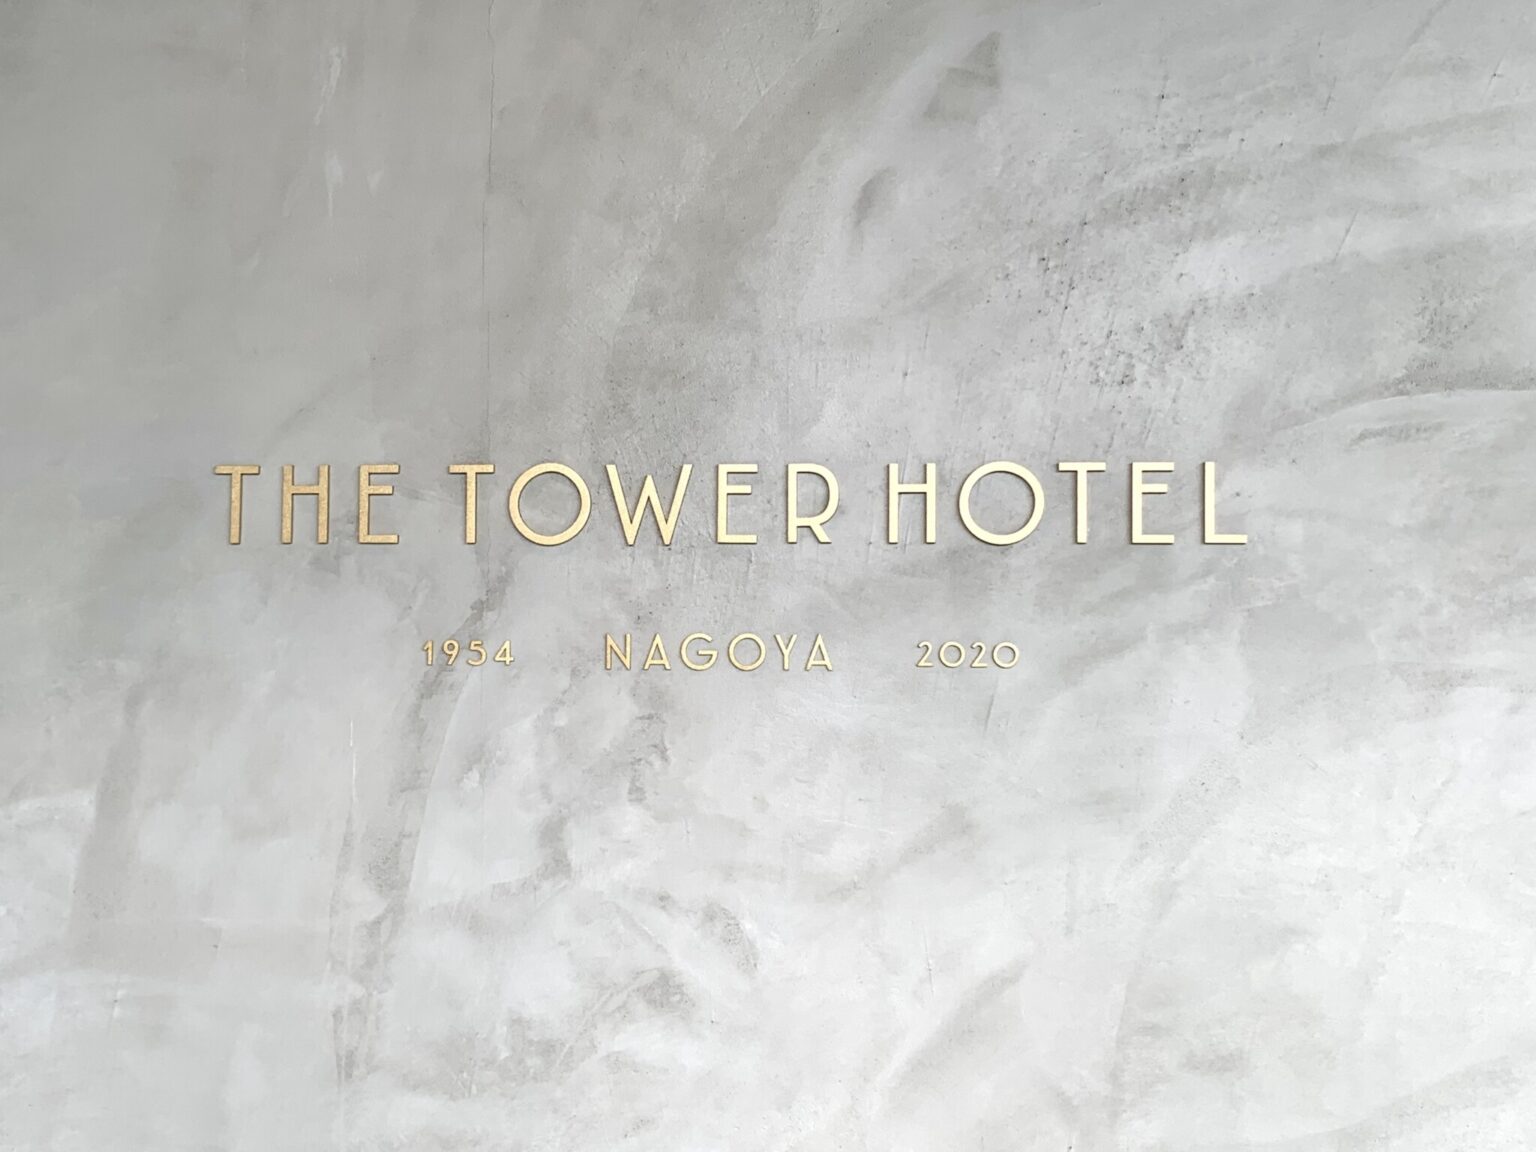 〈THE TOWER HOTEL NAGOYA〉のコンセプトは「ローカライジング」。